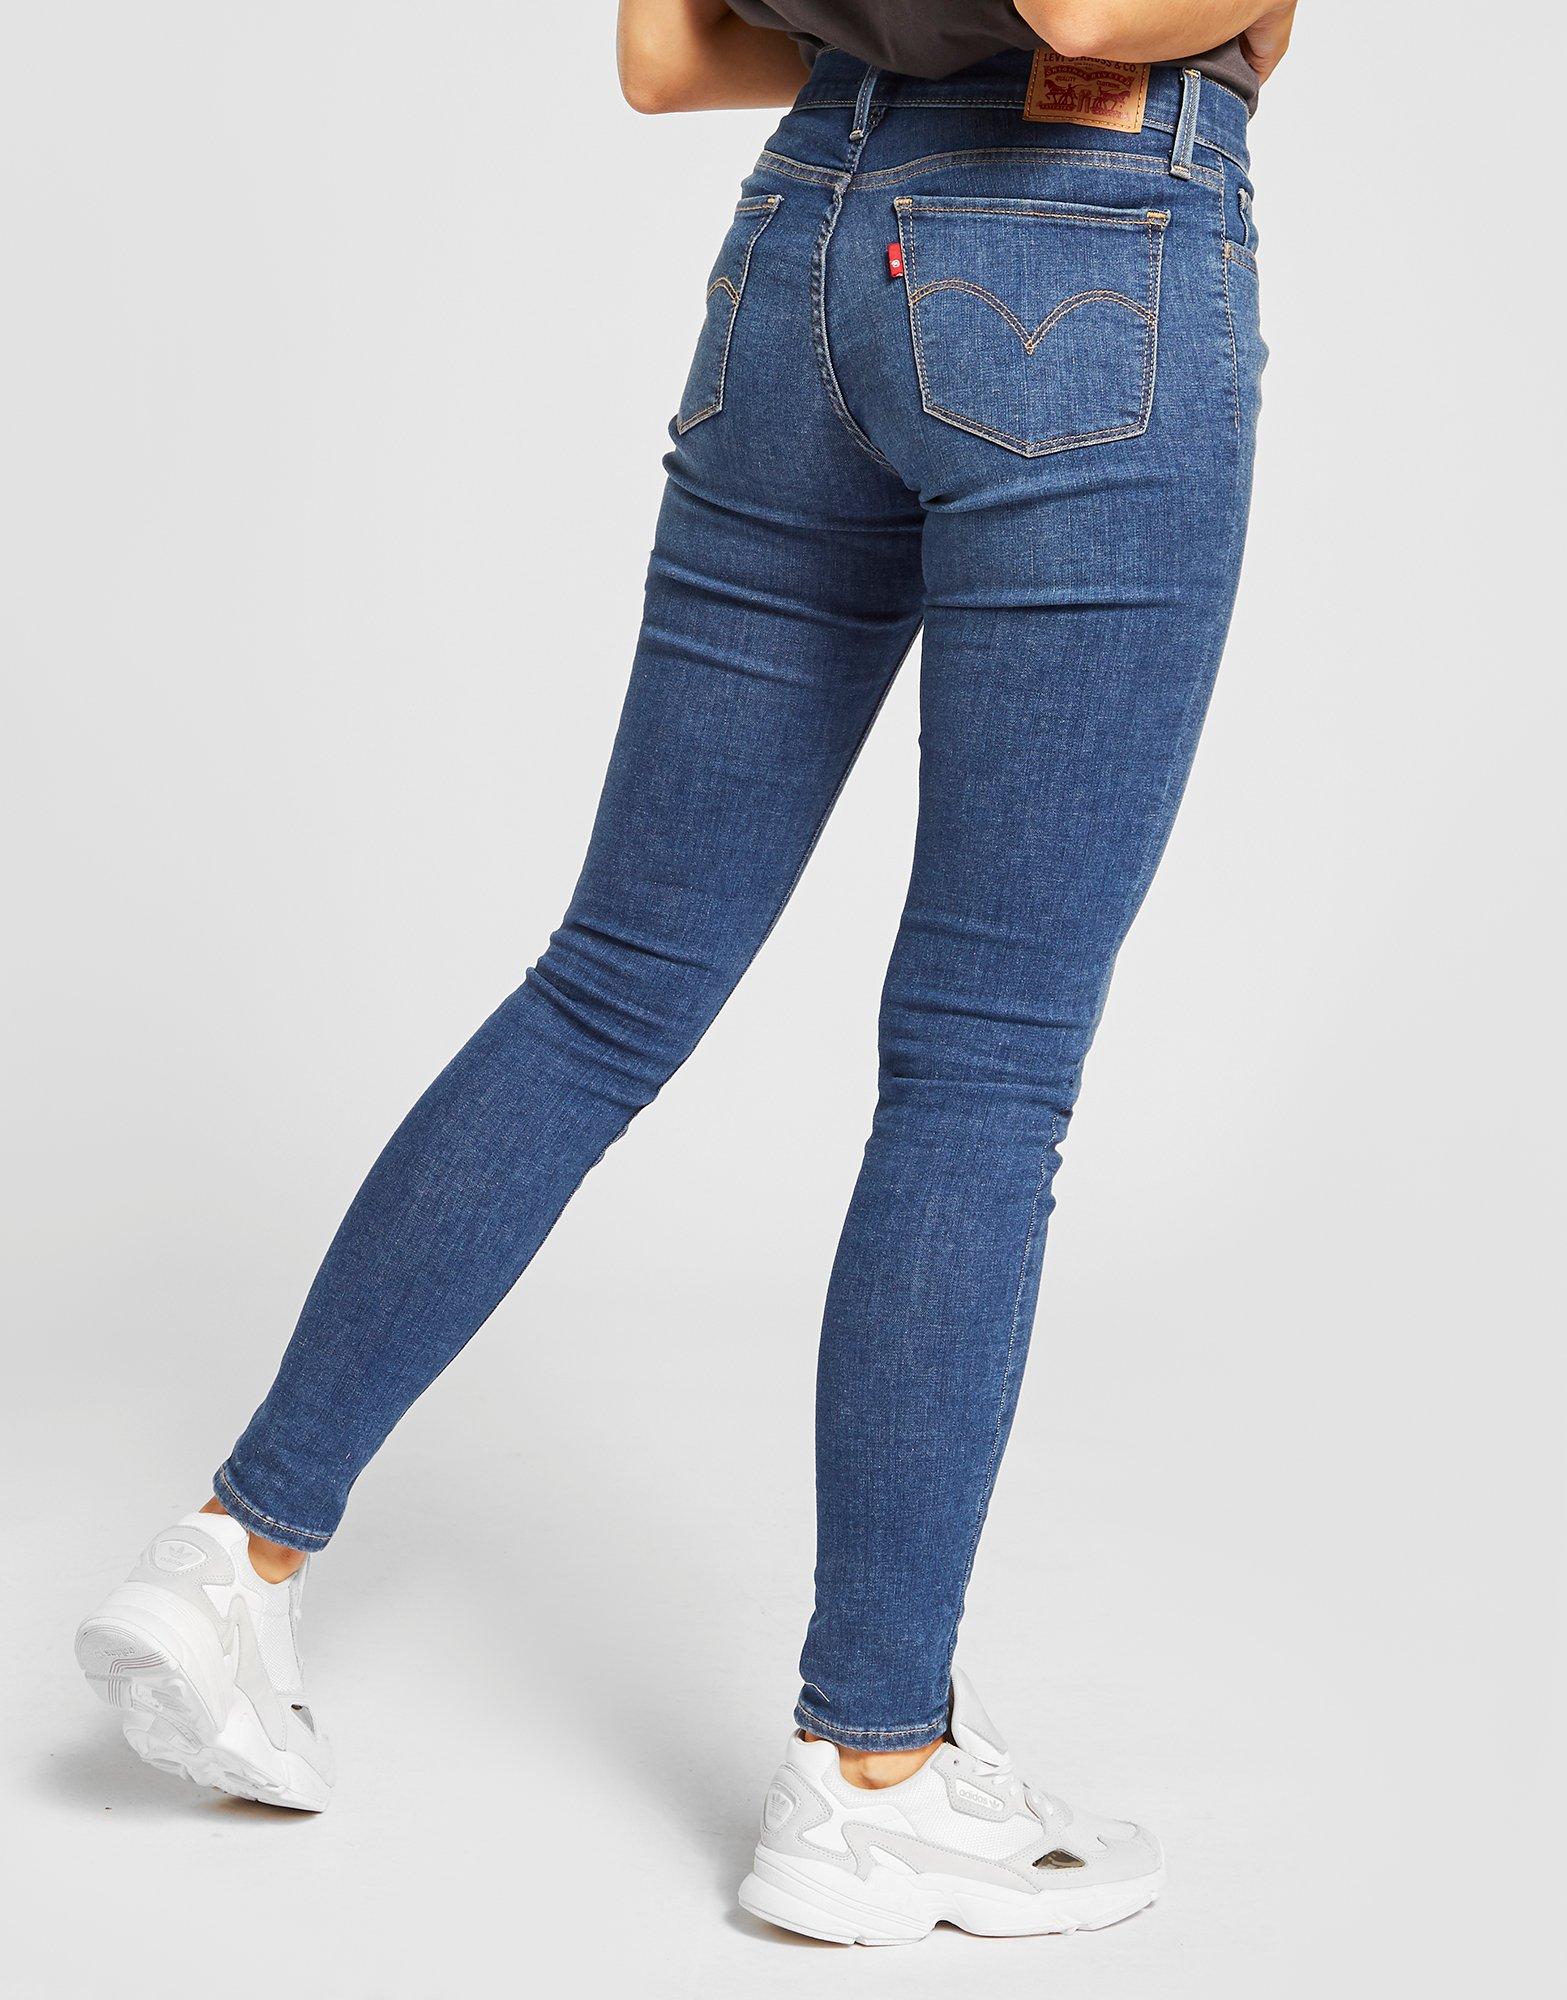 super skinny jeans levis